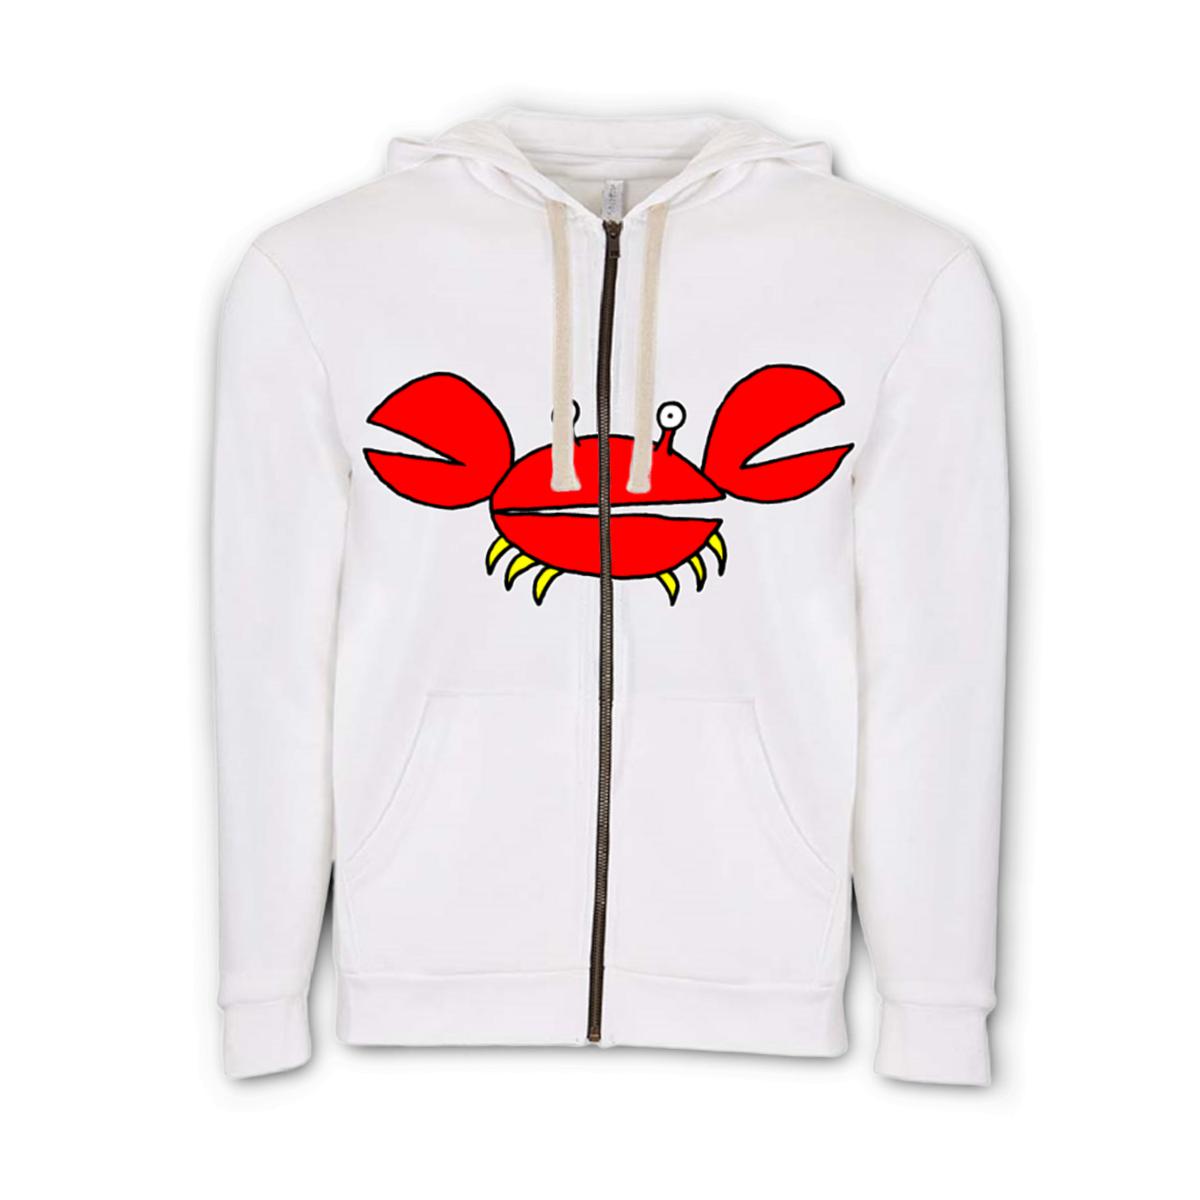 Crab Unisex Zip Hoodie Large white